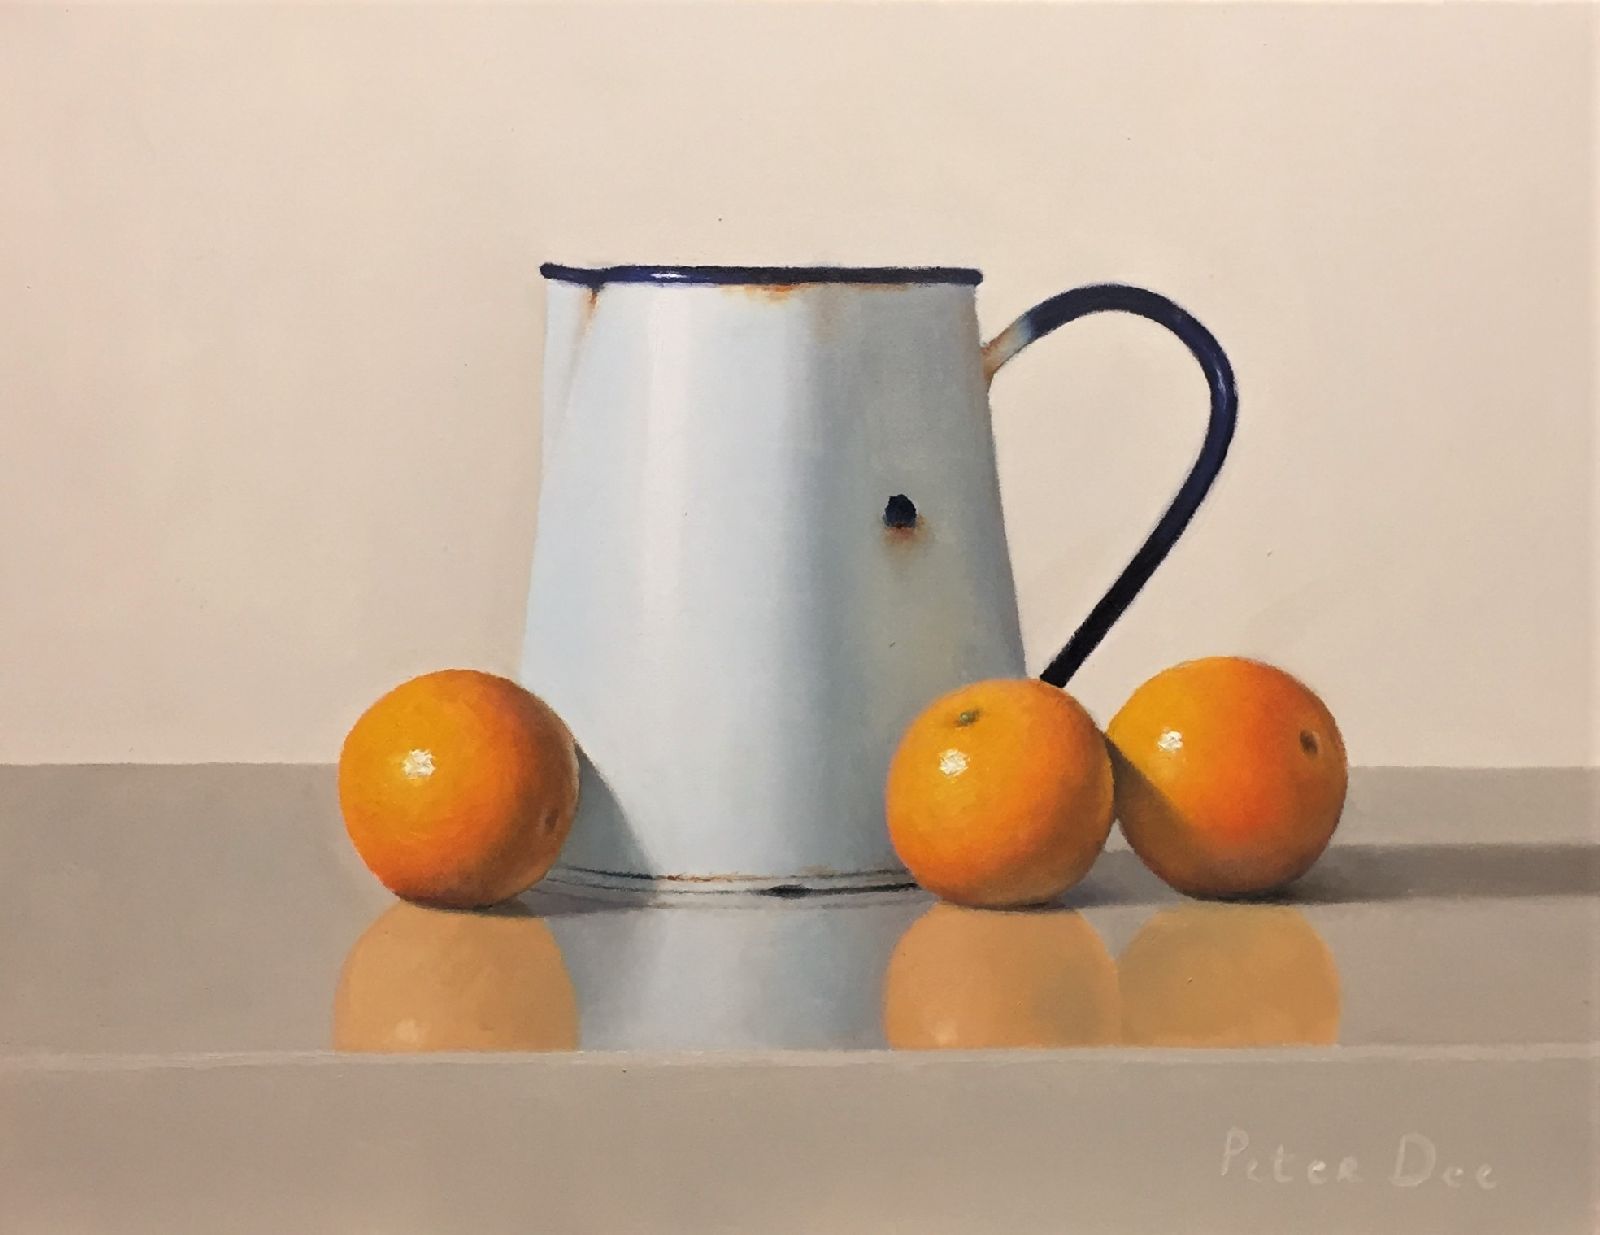 Blue Enamelware with Oranges by Peter Dee